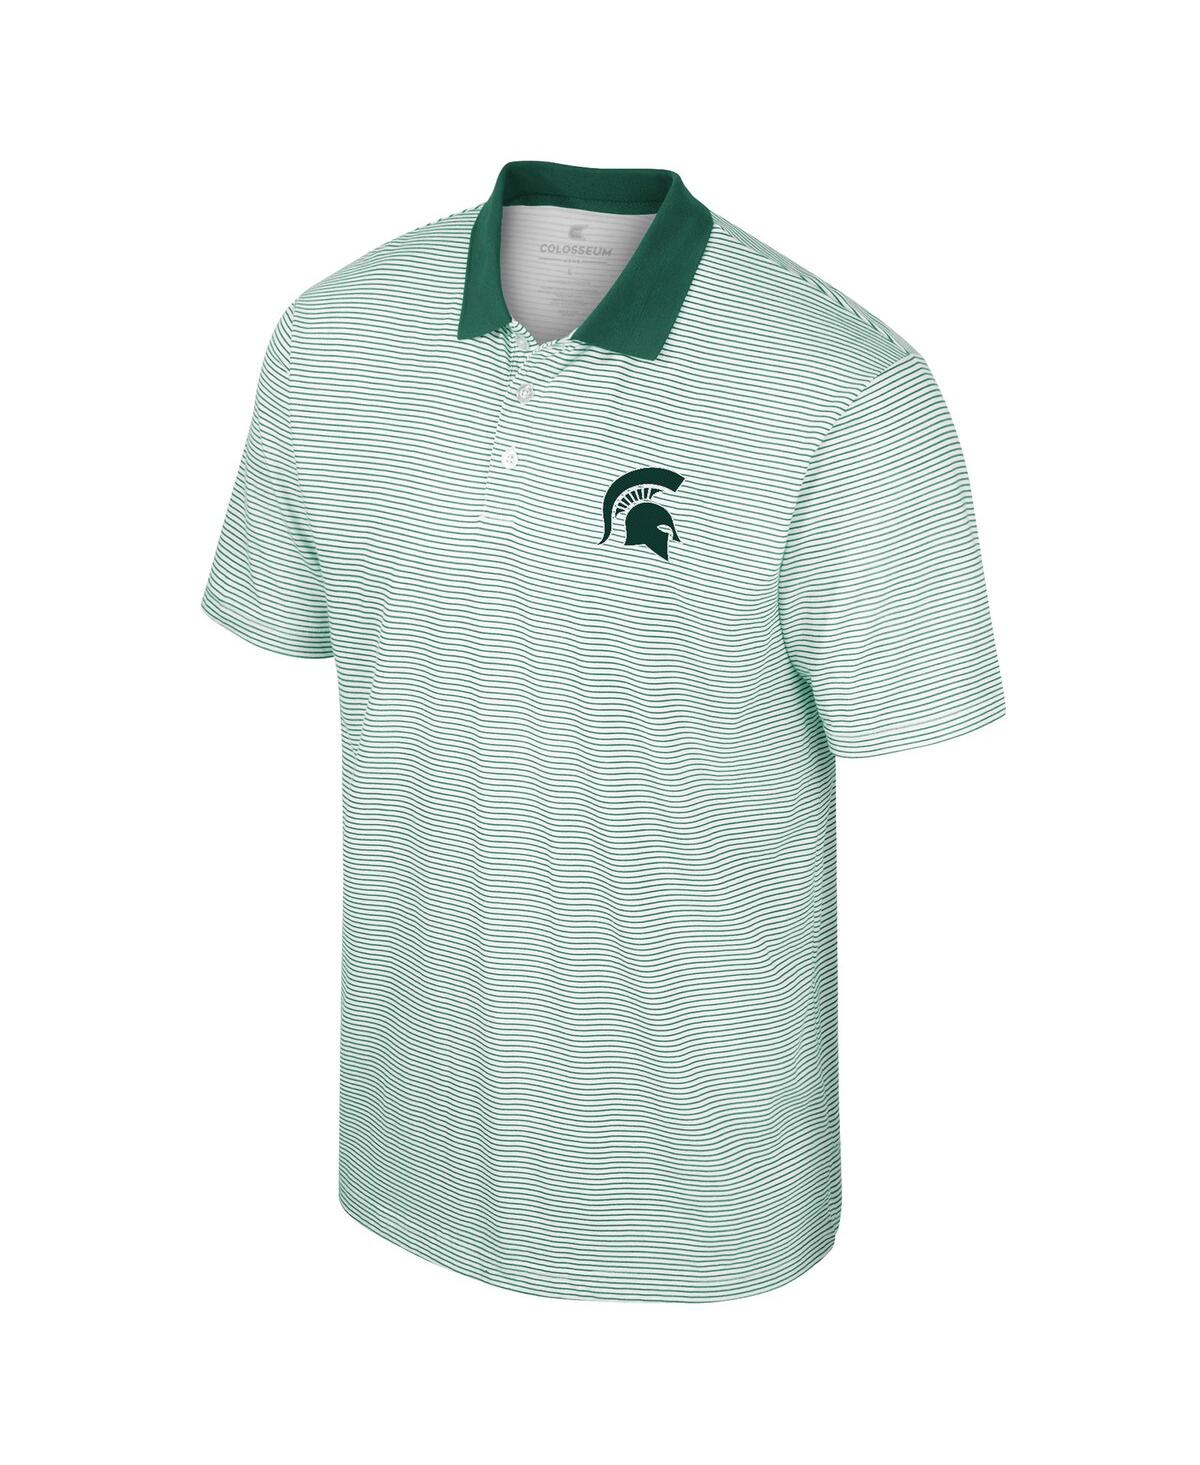 Shop Colosseum Men's  White Michigan State Spartans Print Stripe Polo Shirt